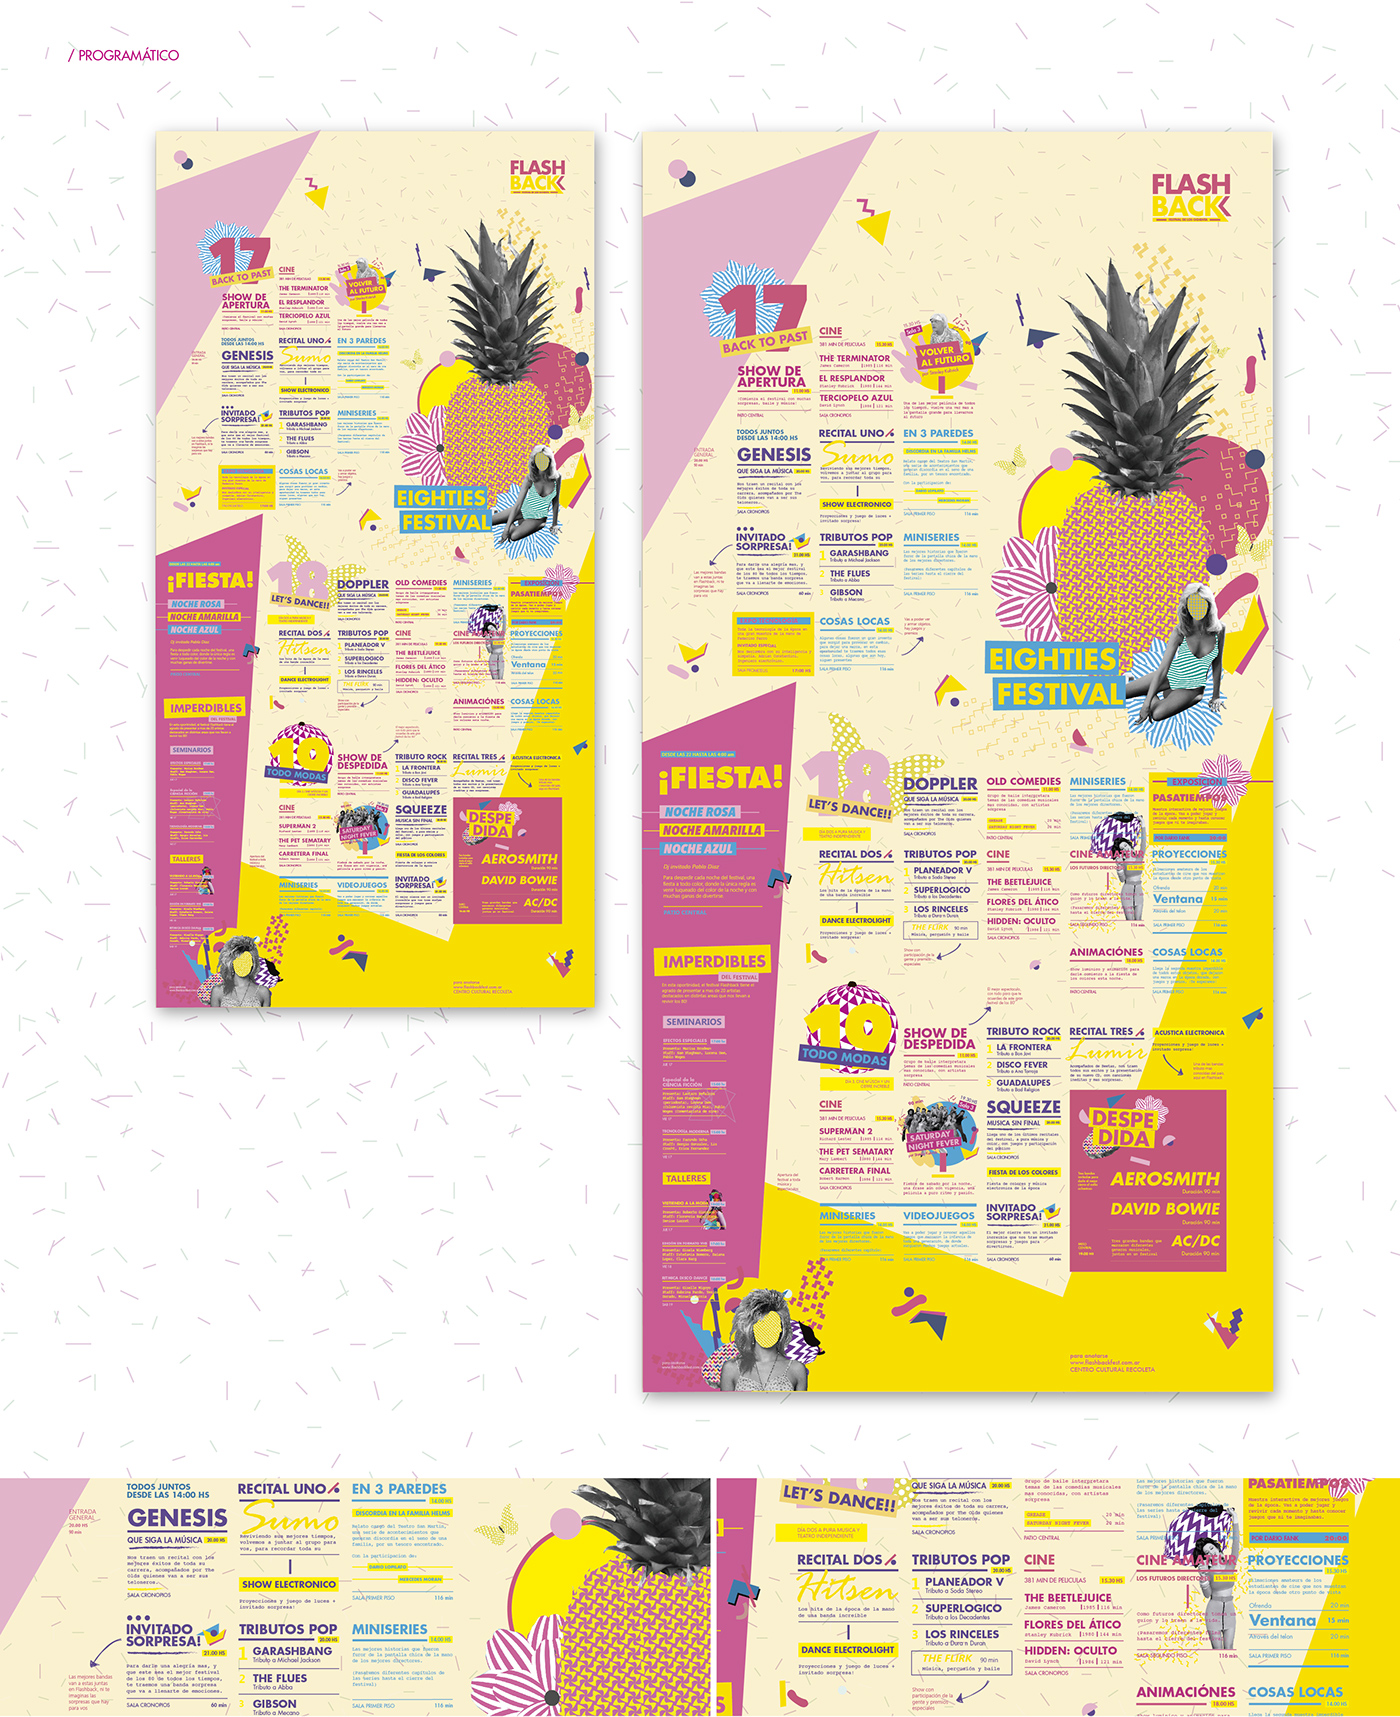 diseño gráfico gabriele 3 sistema festival anos 80 programatico desplegable aficheta postales FLASH BACK